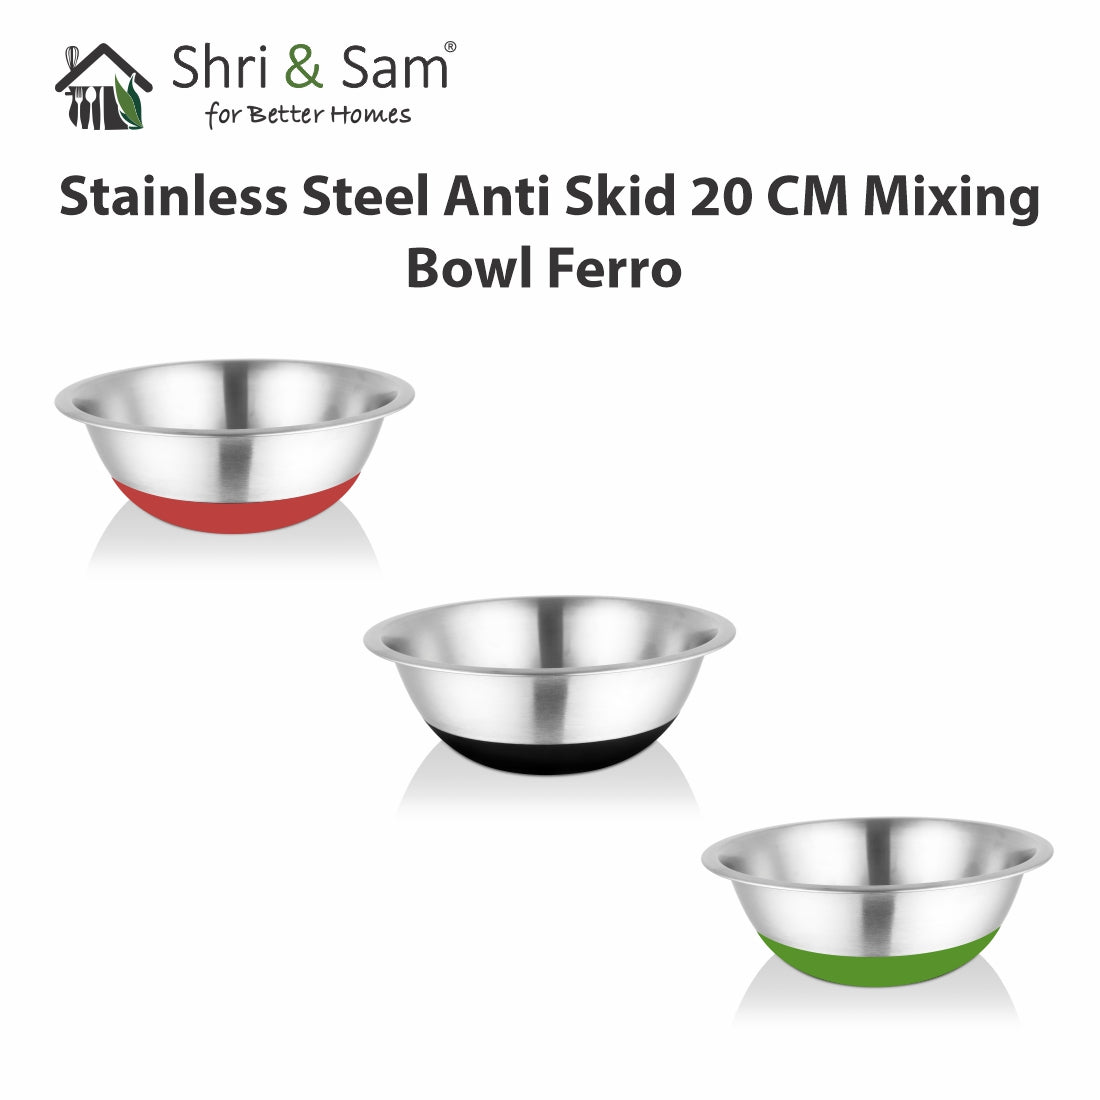 Stainless Steel Anti Skid 20 CM Mixing Bowl Ferro